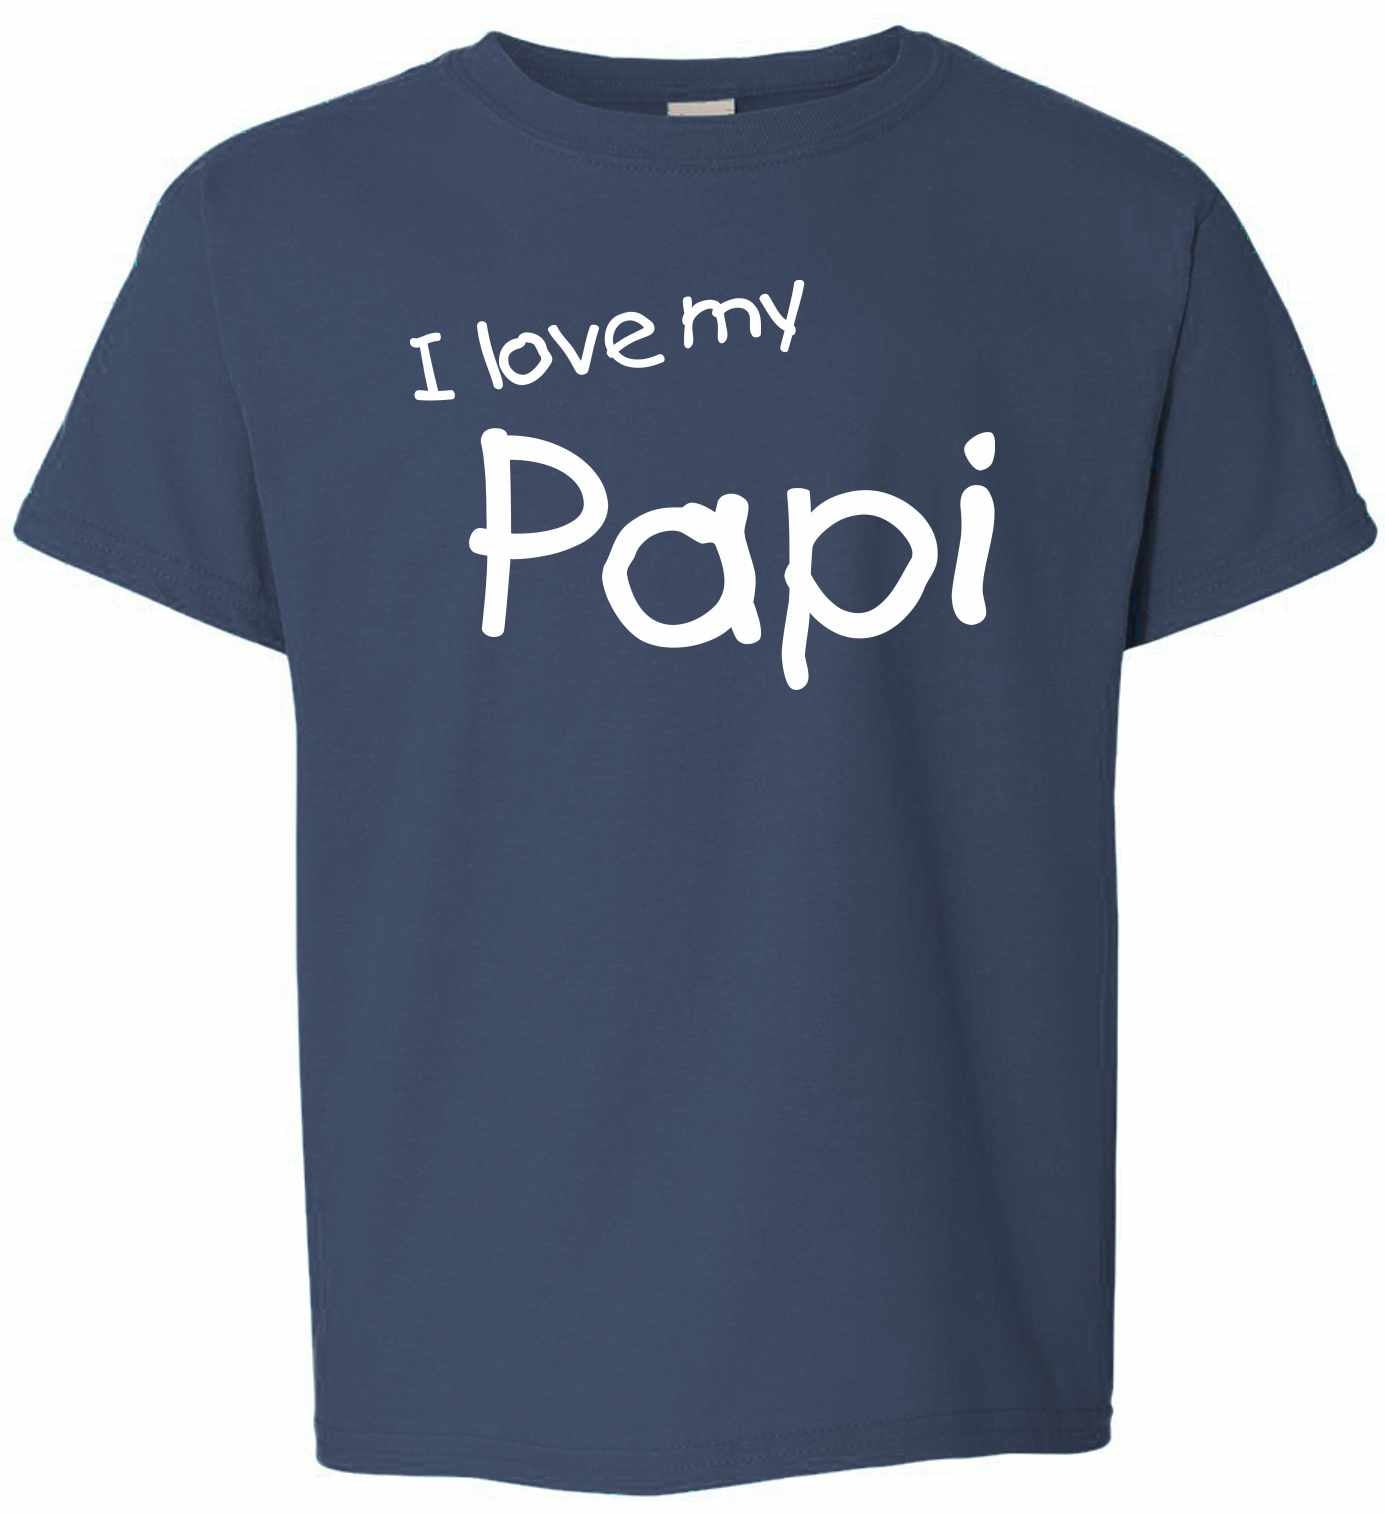 I Love My Papi on Kids T-Shirt (#1126-201)